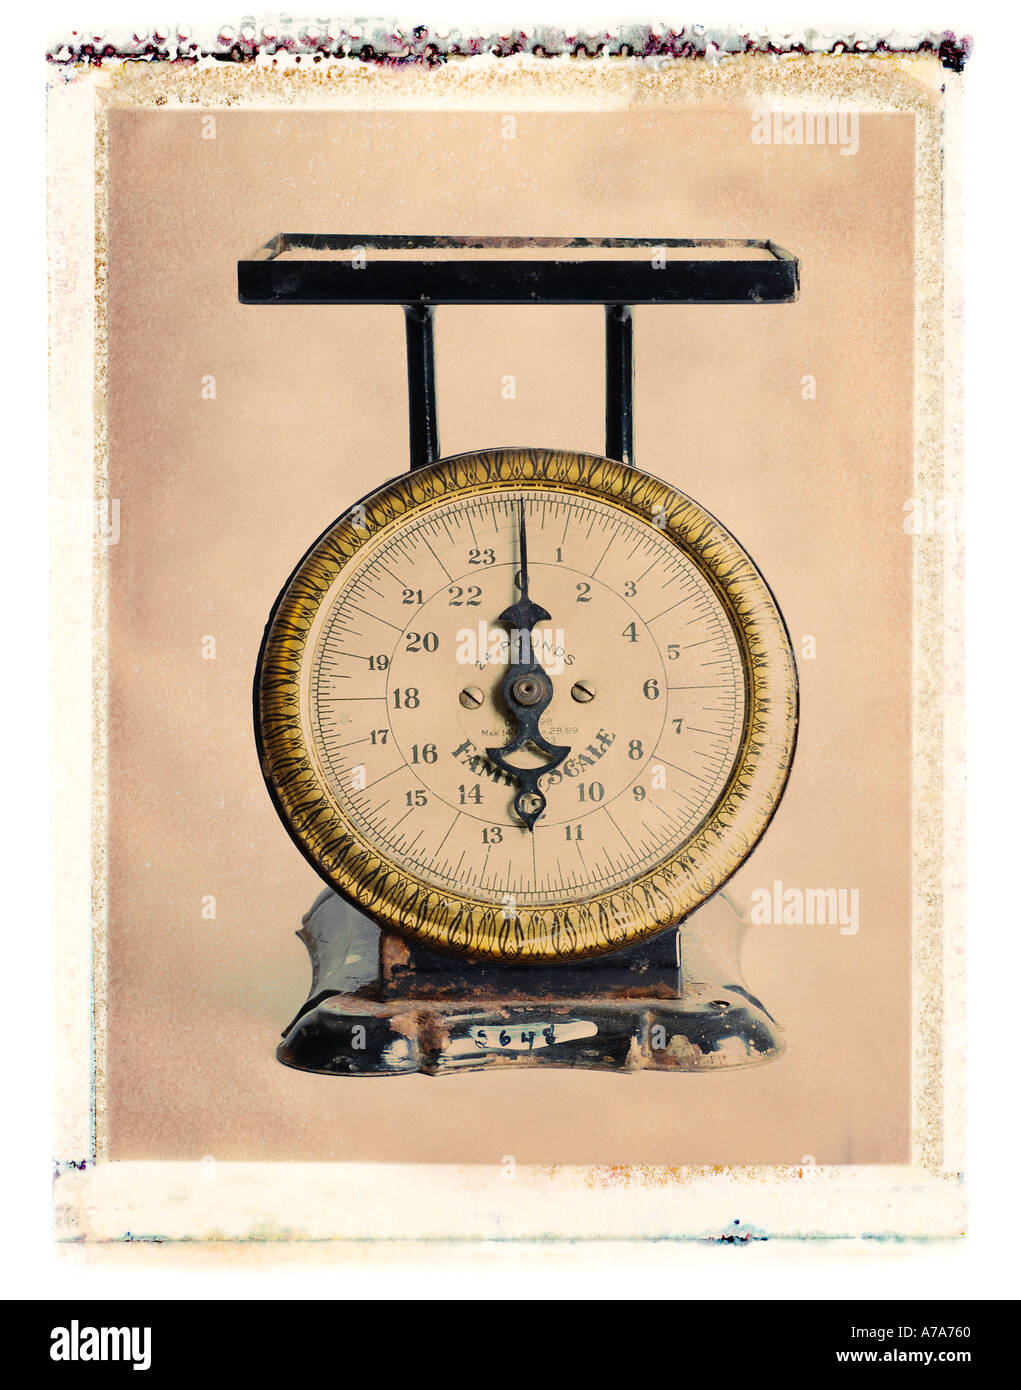 antique scale Stock Photo